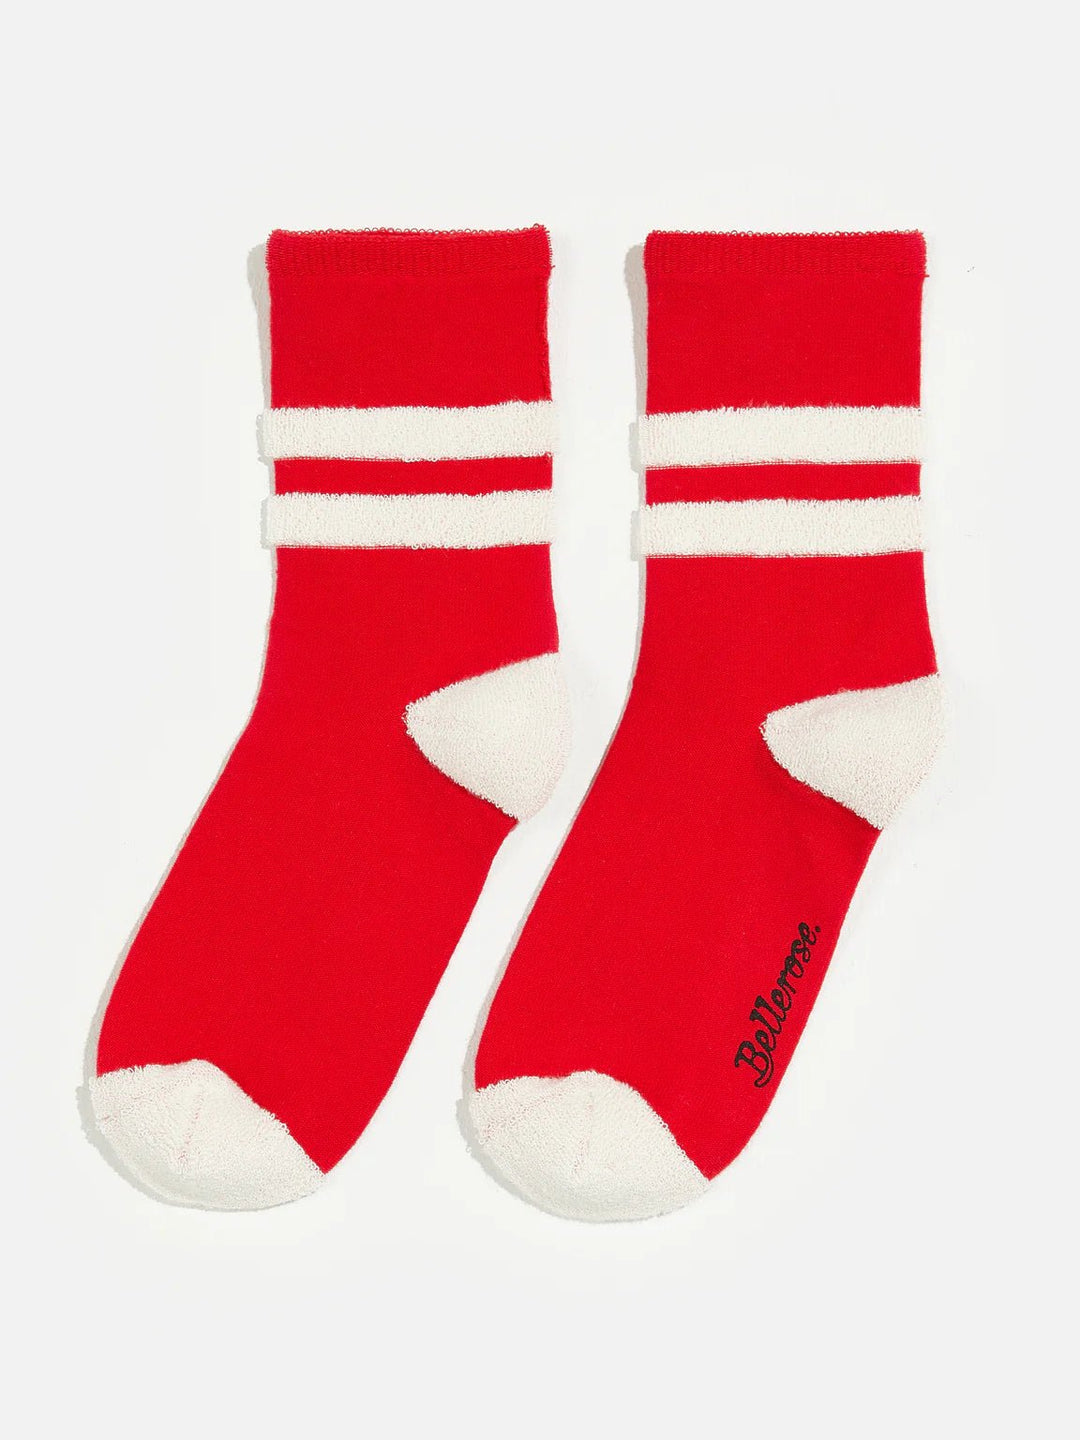 Boukle Socks - Massai Red - Posh New York